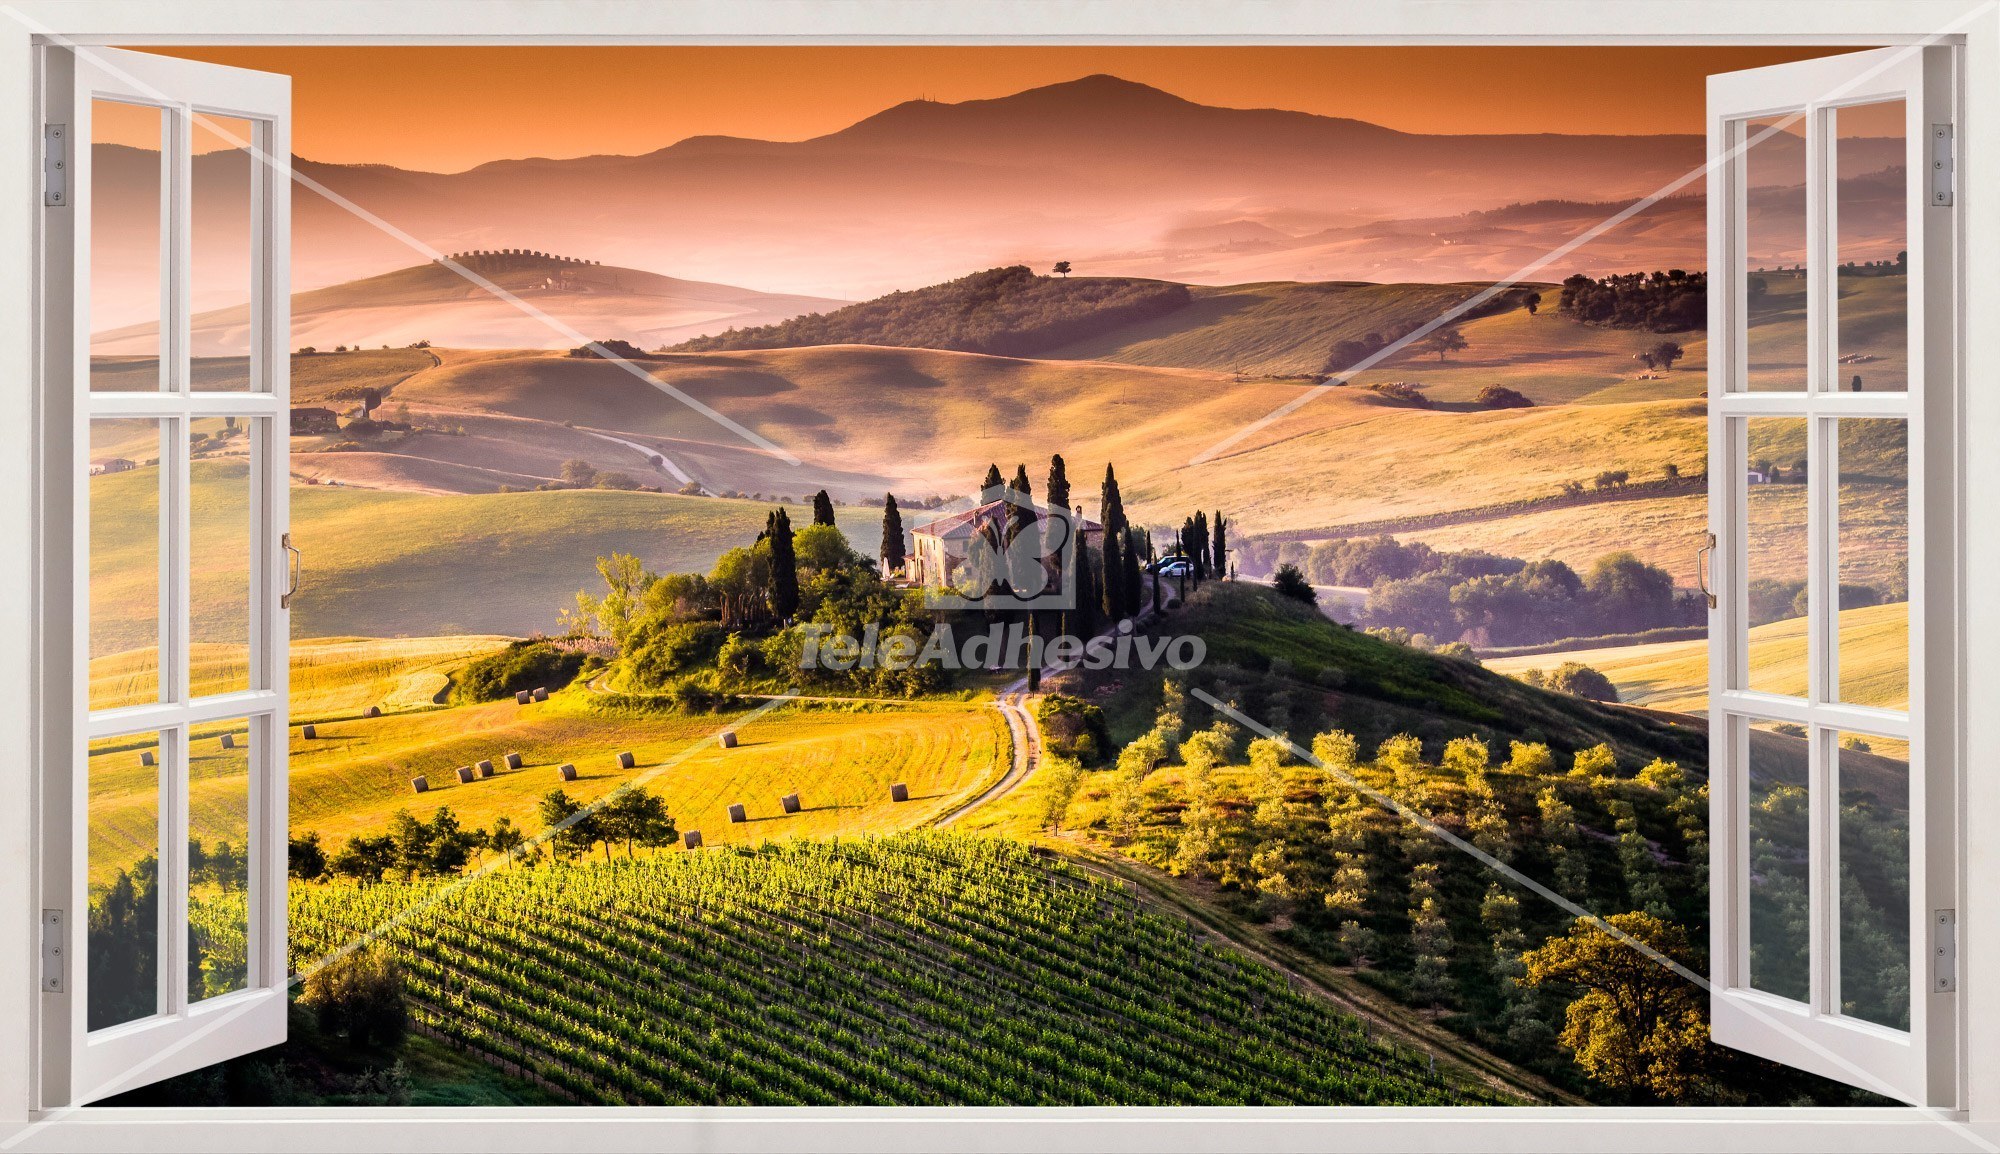 Vinilos Decorativos: Panorámica Toscana italiana